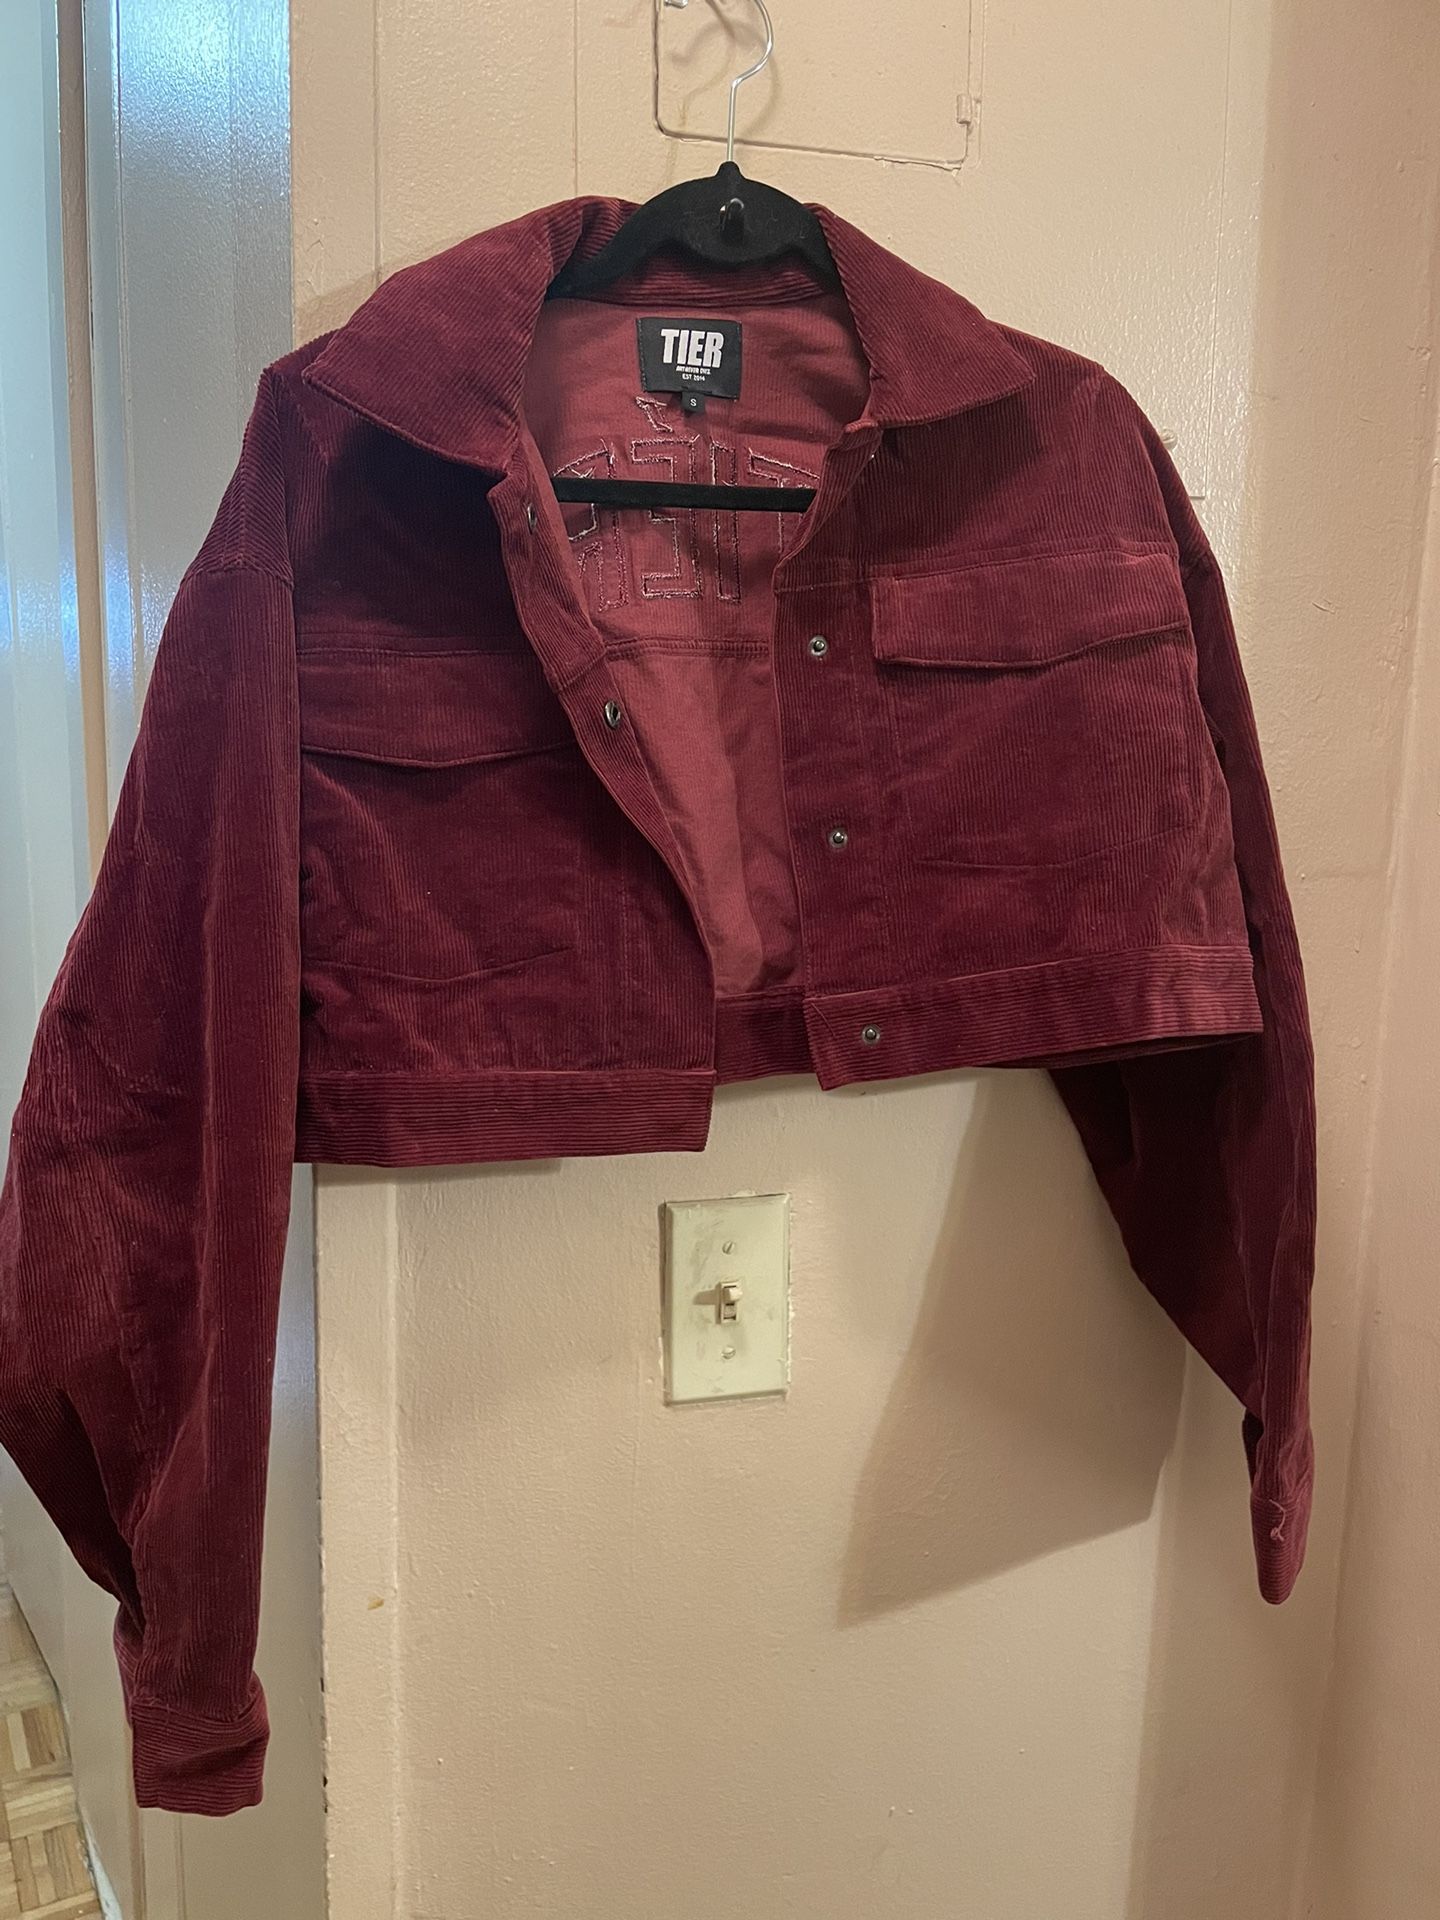 Corduroy Cropped Jacket. TIERNYC Brand, size small. Nice oversized fit